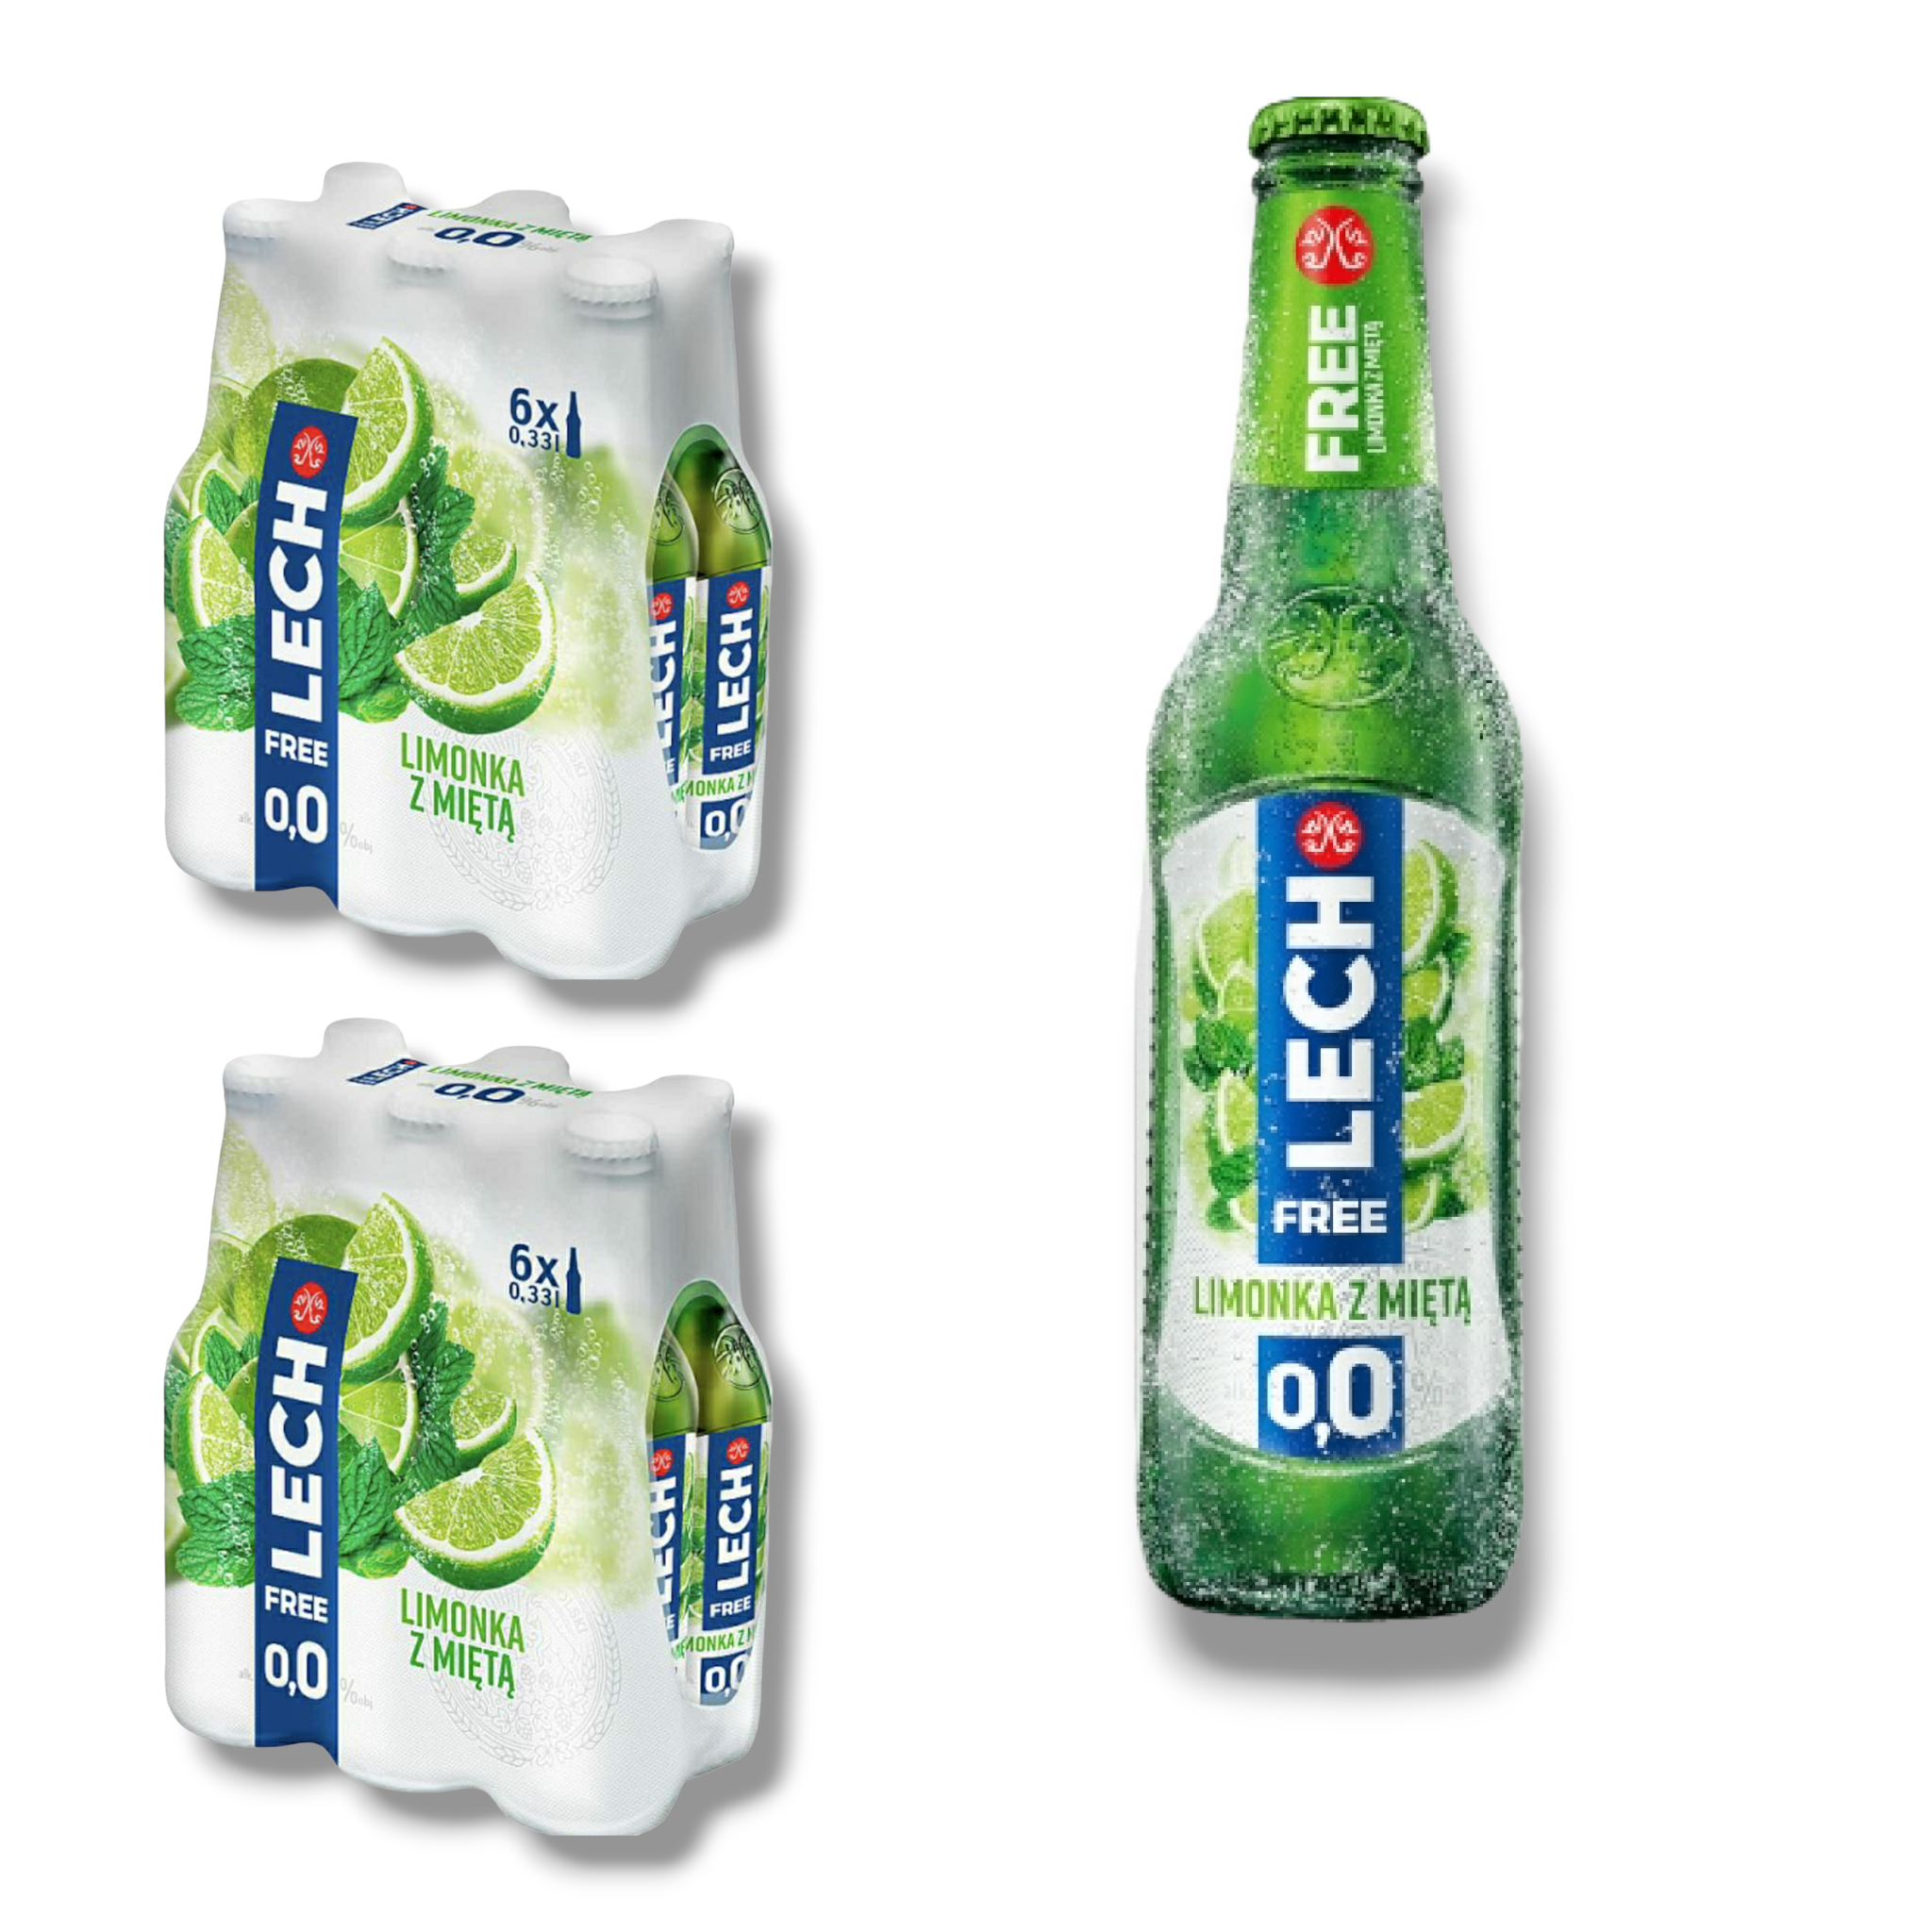 Lech free 0,33l- Limette & Minze alkoholfreies Bier aus Polen 0,0% Vol.